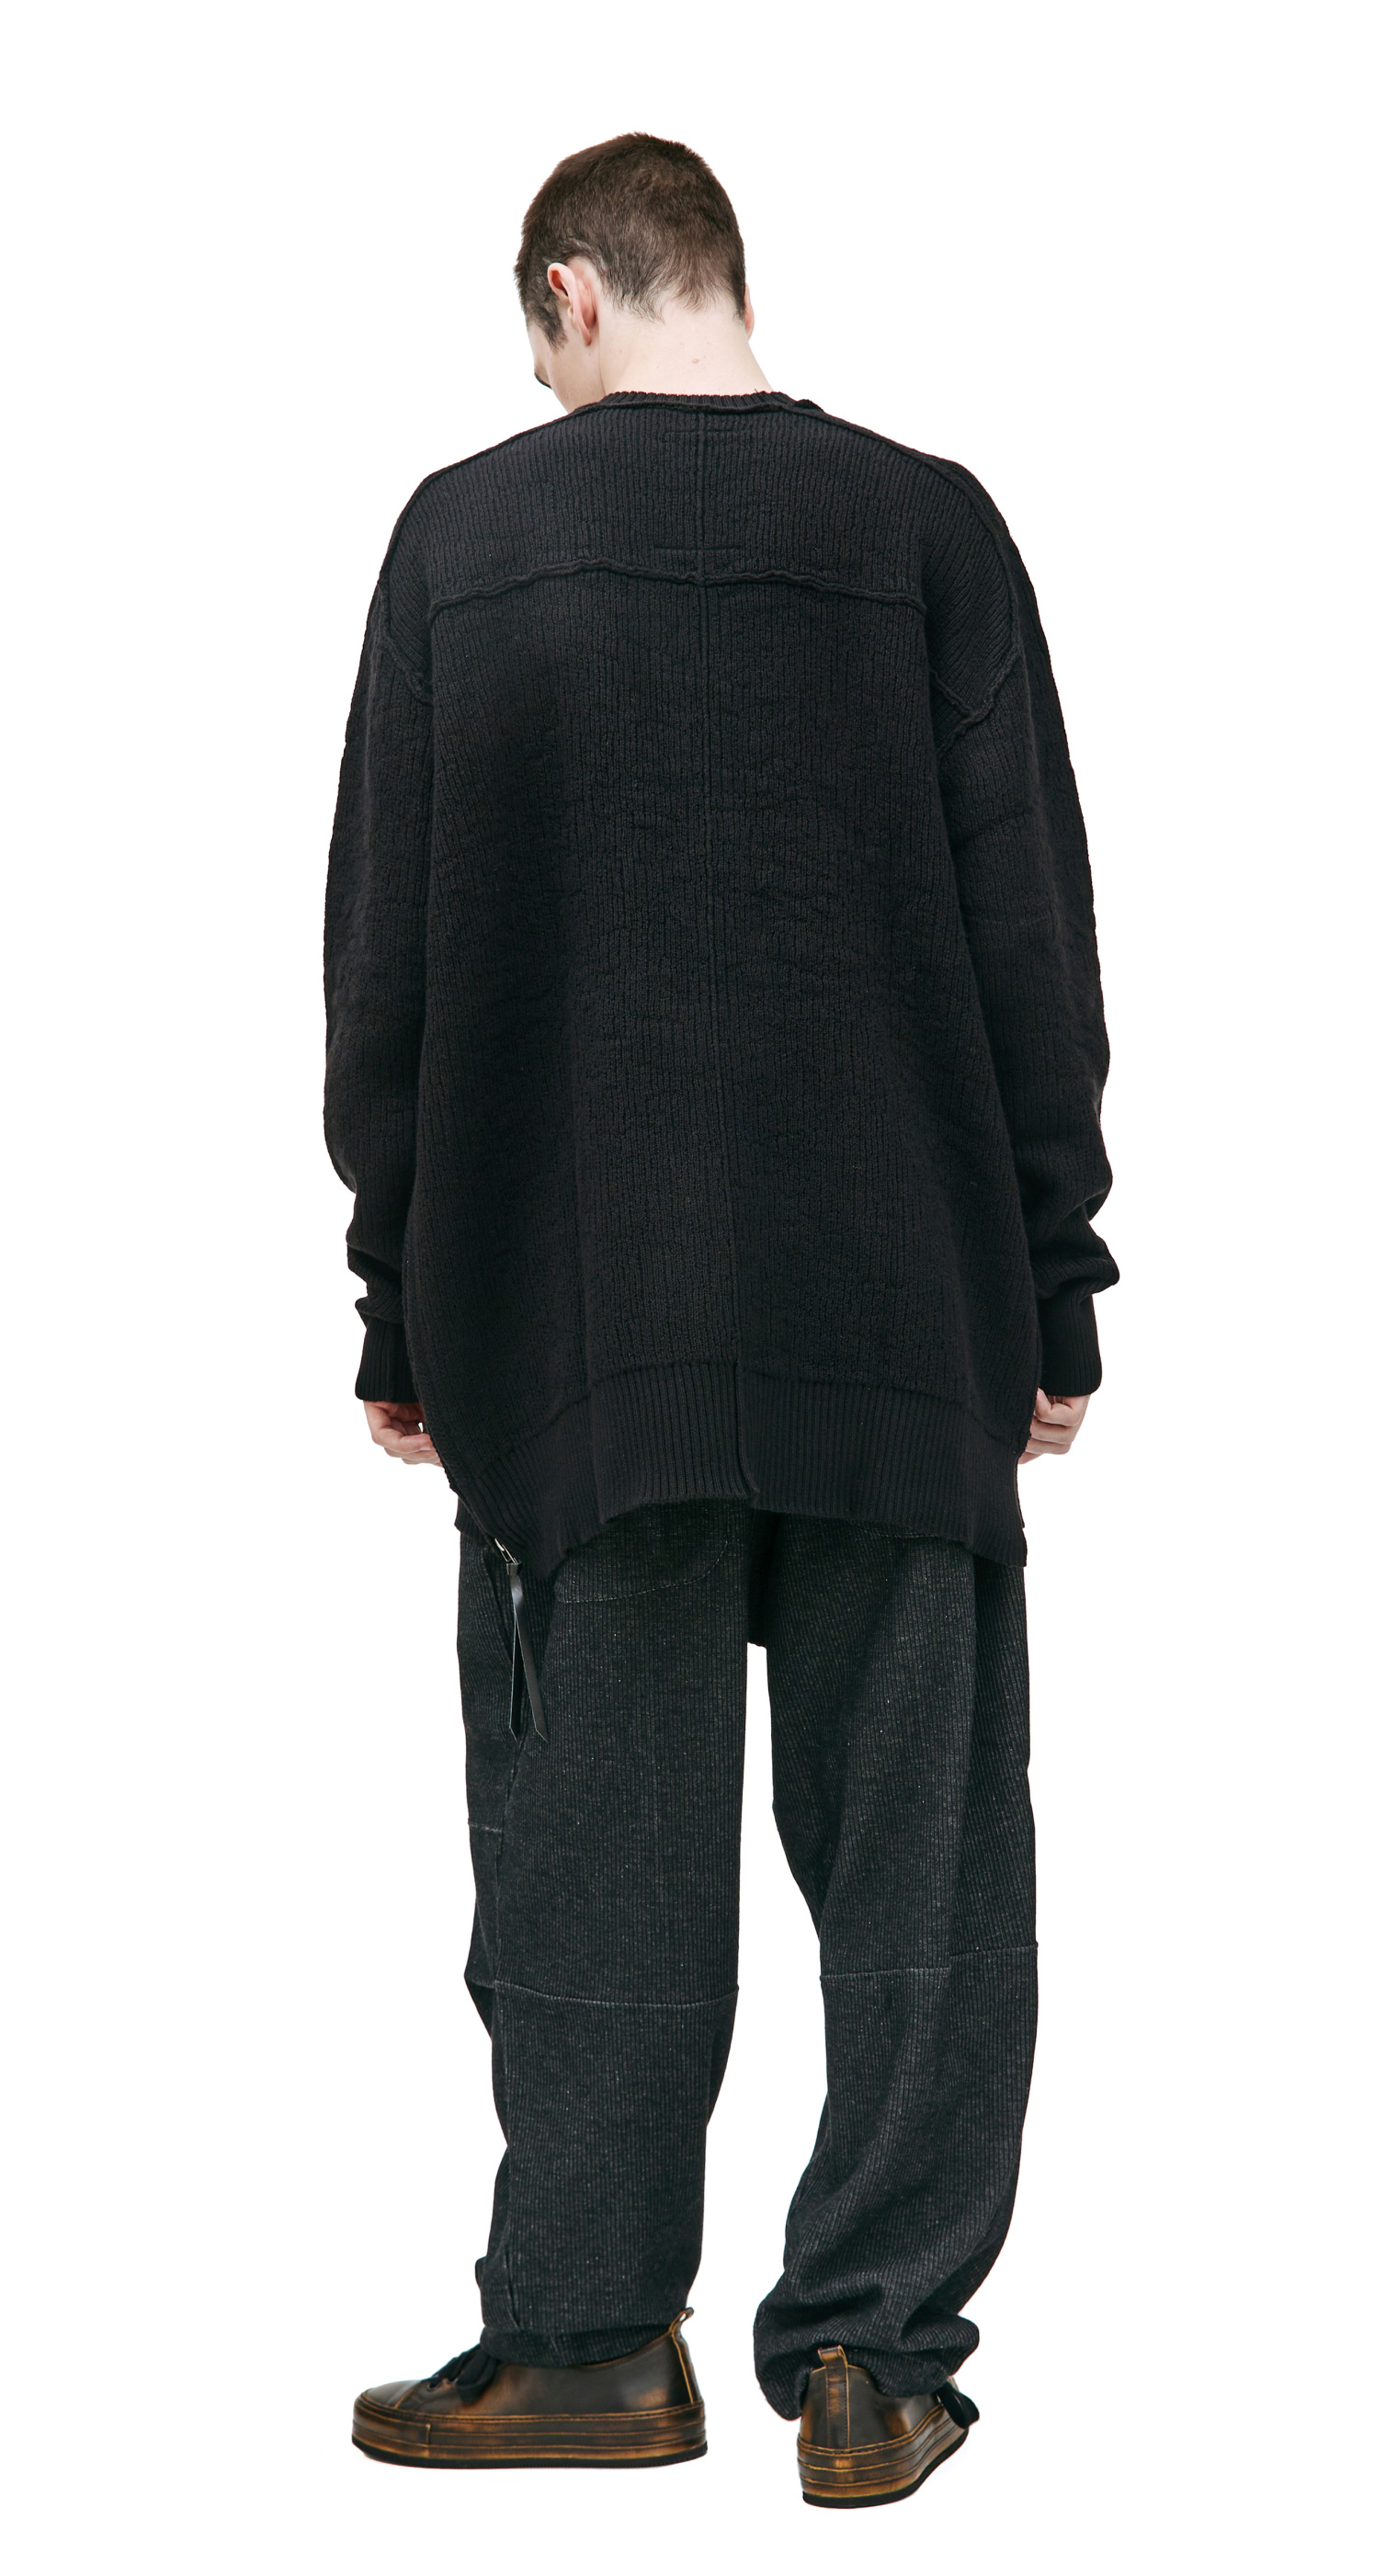 The Viridi-Anne Сotton sweater with zip up